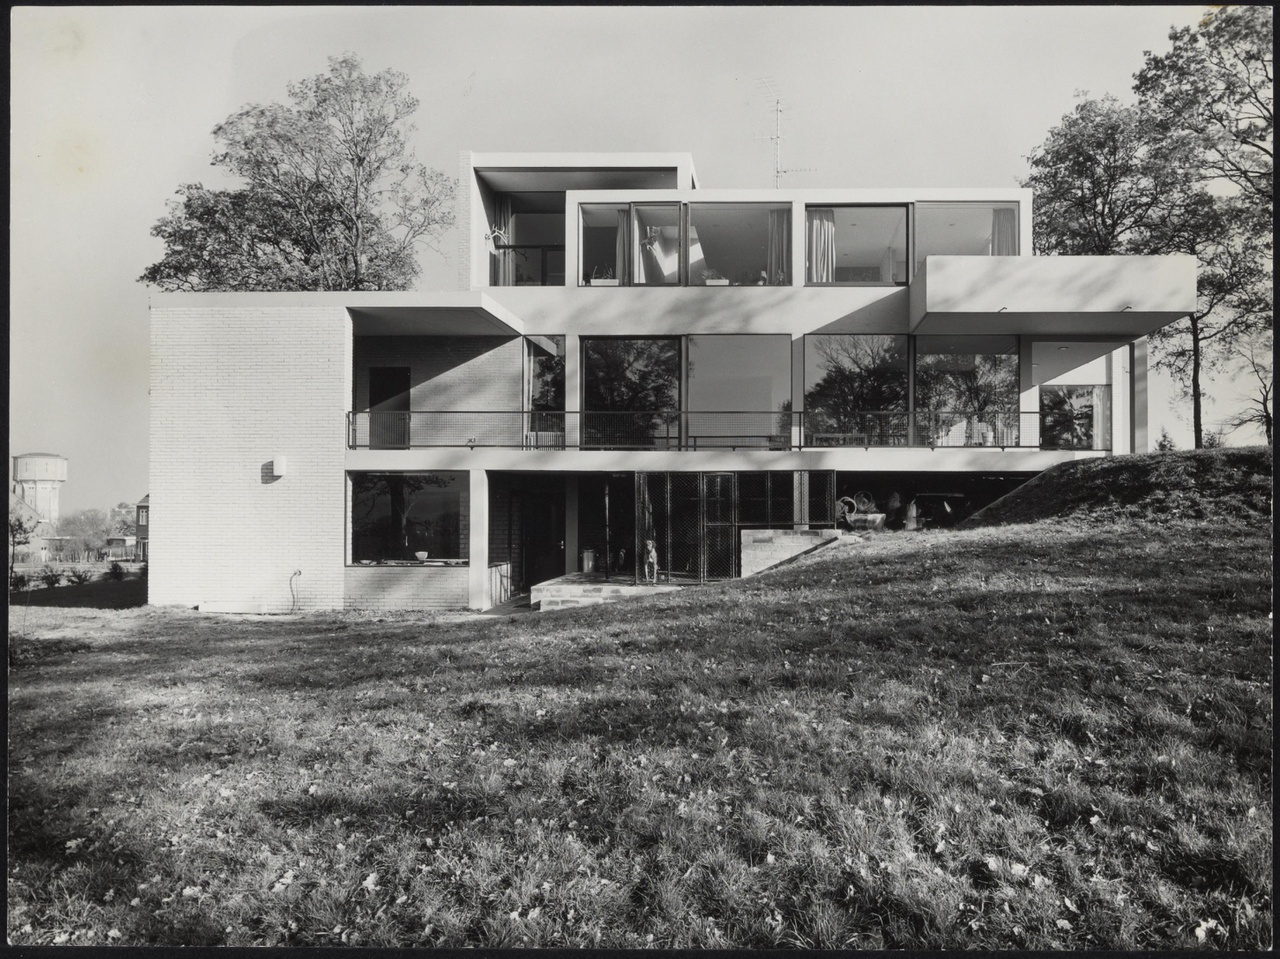 Afbeelding van woning Van Slobbe, Heerlen, 1964, westkant